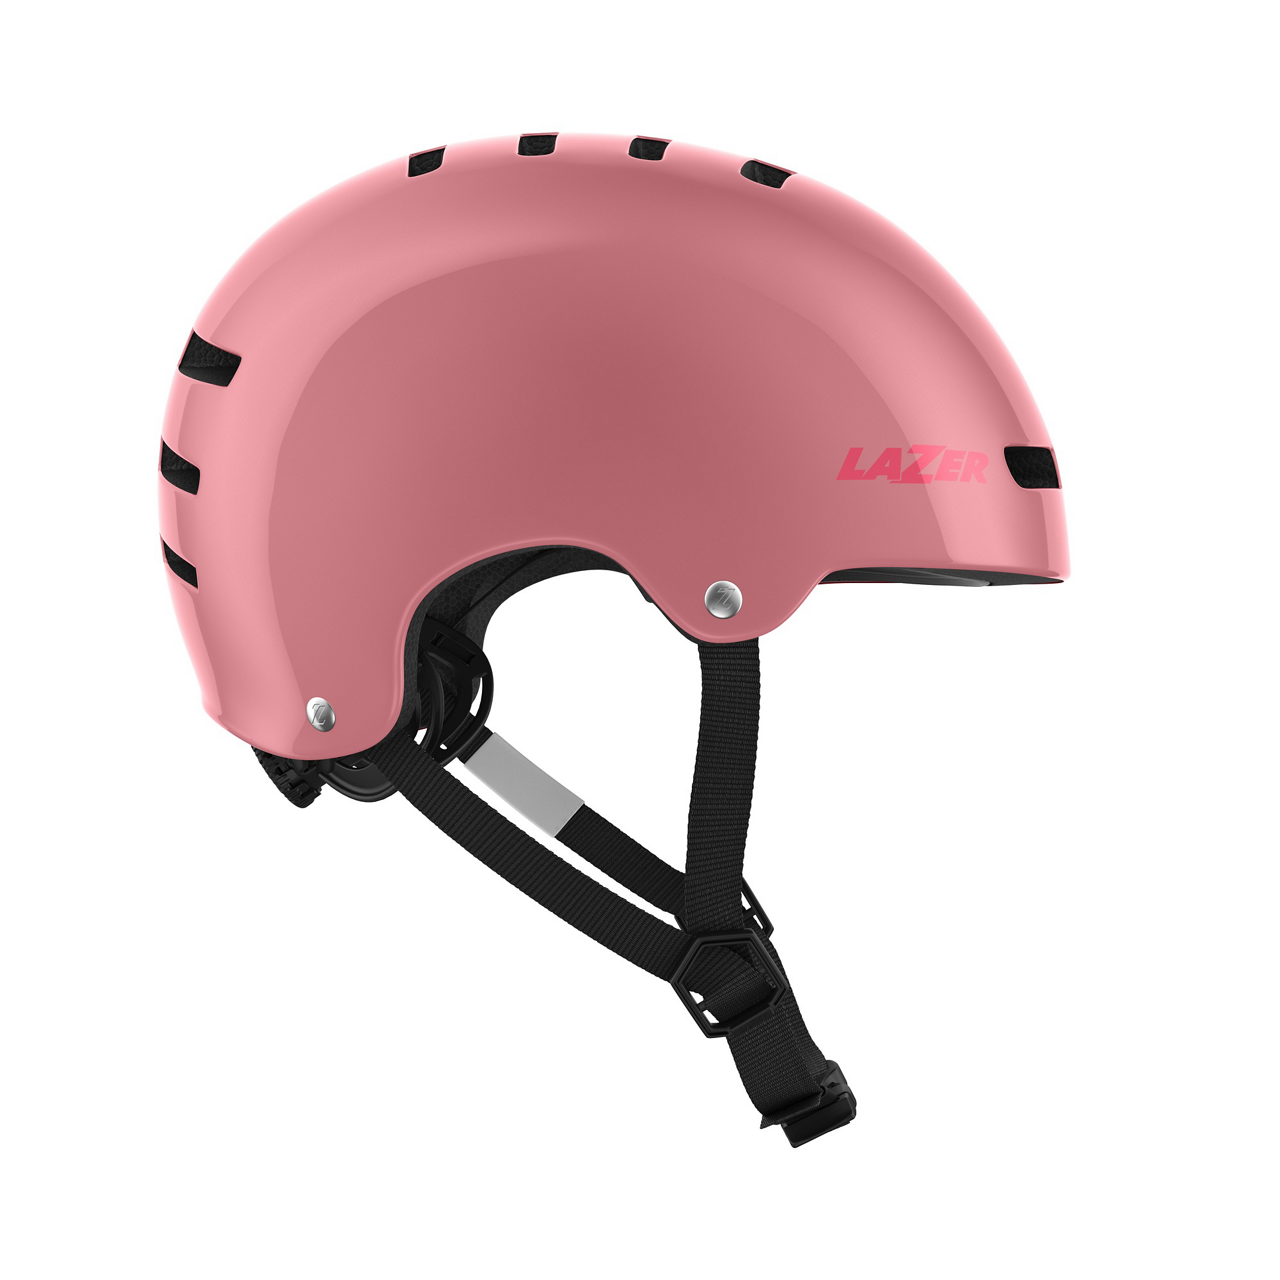 Lazer Armor 2.0 Light pink